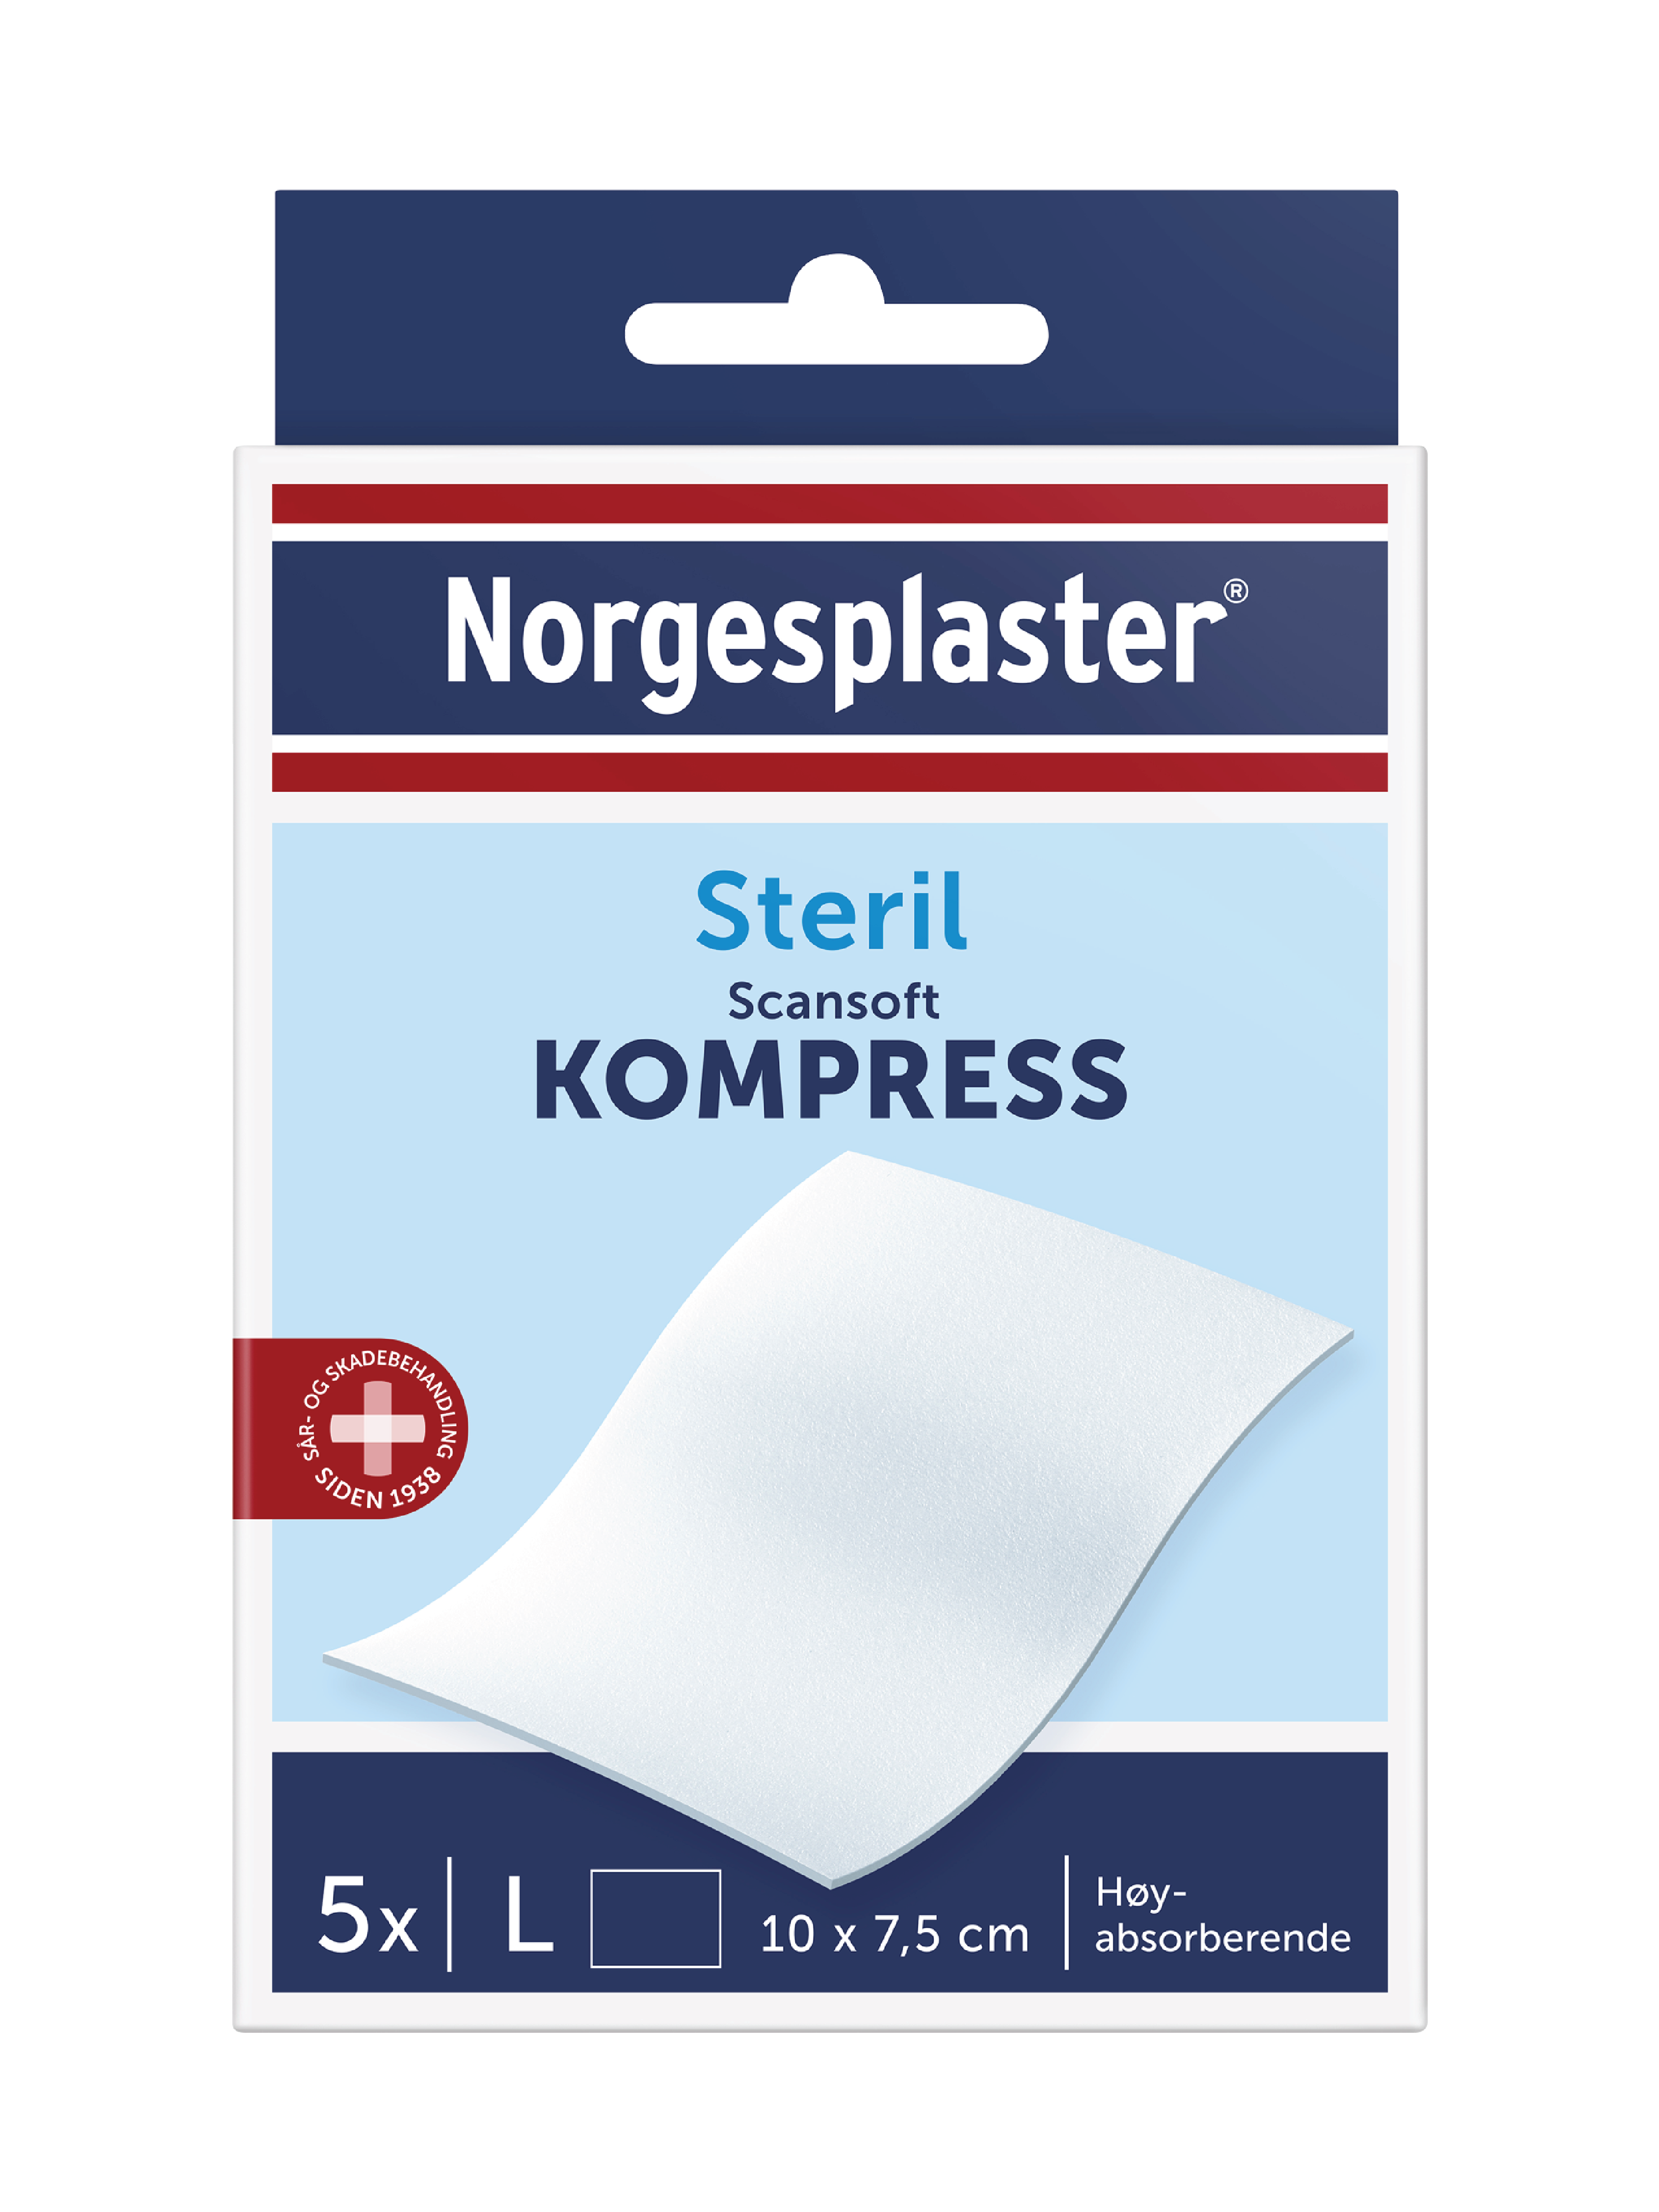 Norgesplaster Scansoft kompress, 10x7,5 cm, 5 stk.